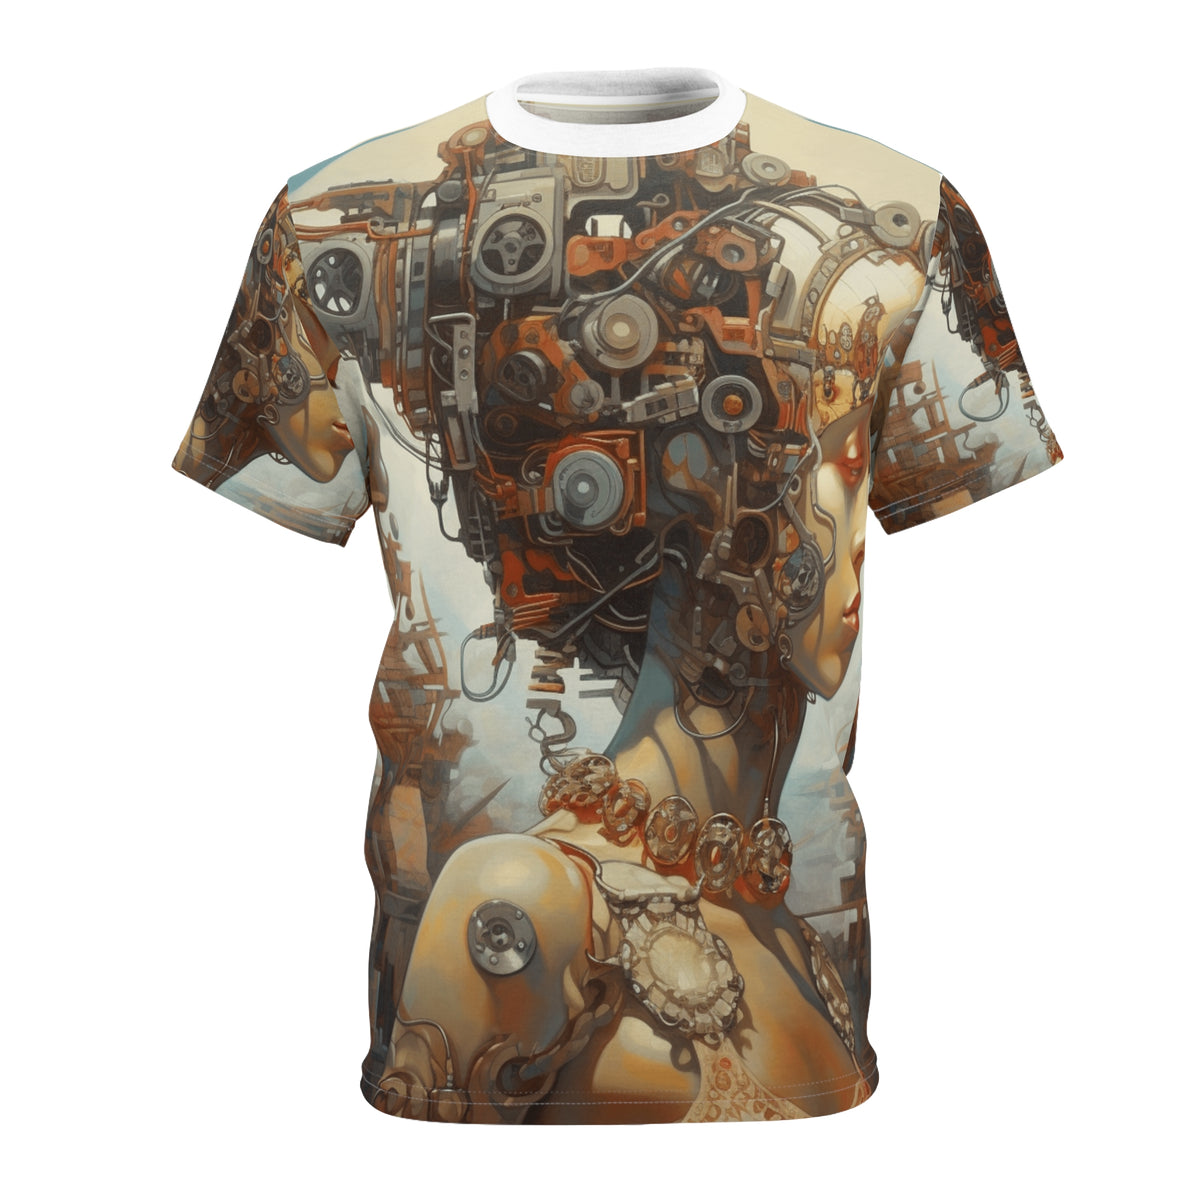 Steampunk shirt Fantasy world all over print T-shirt.